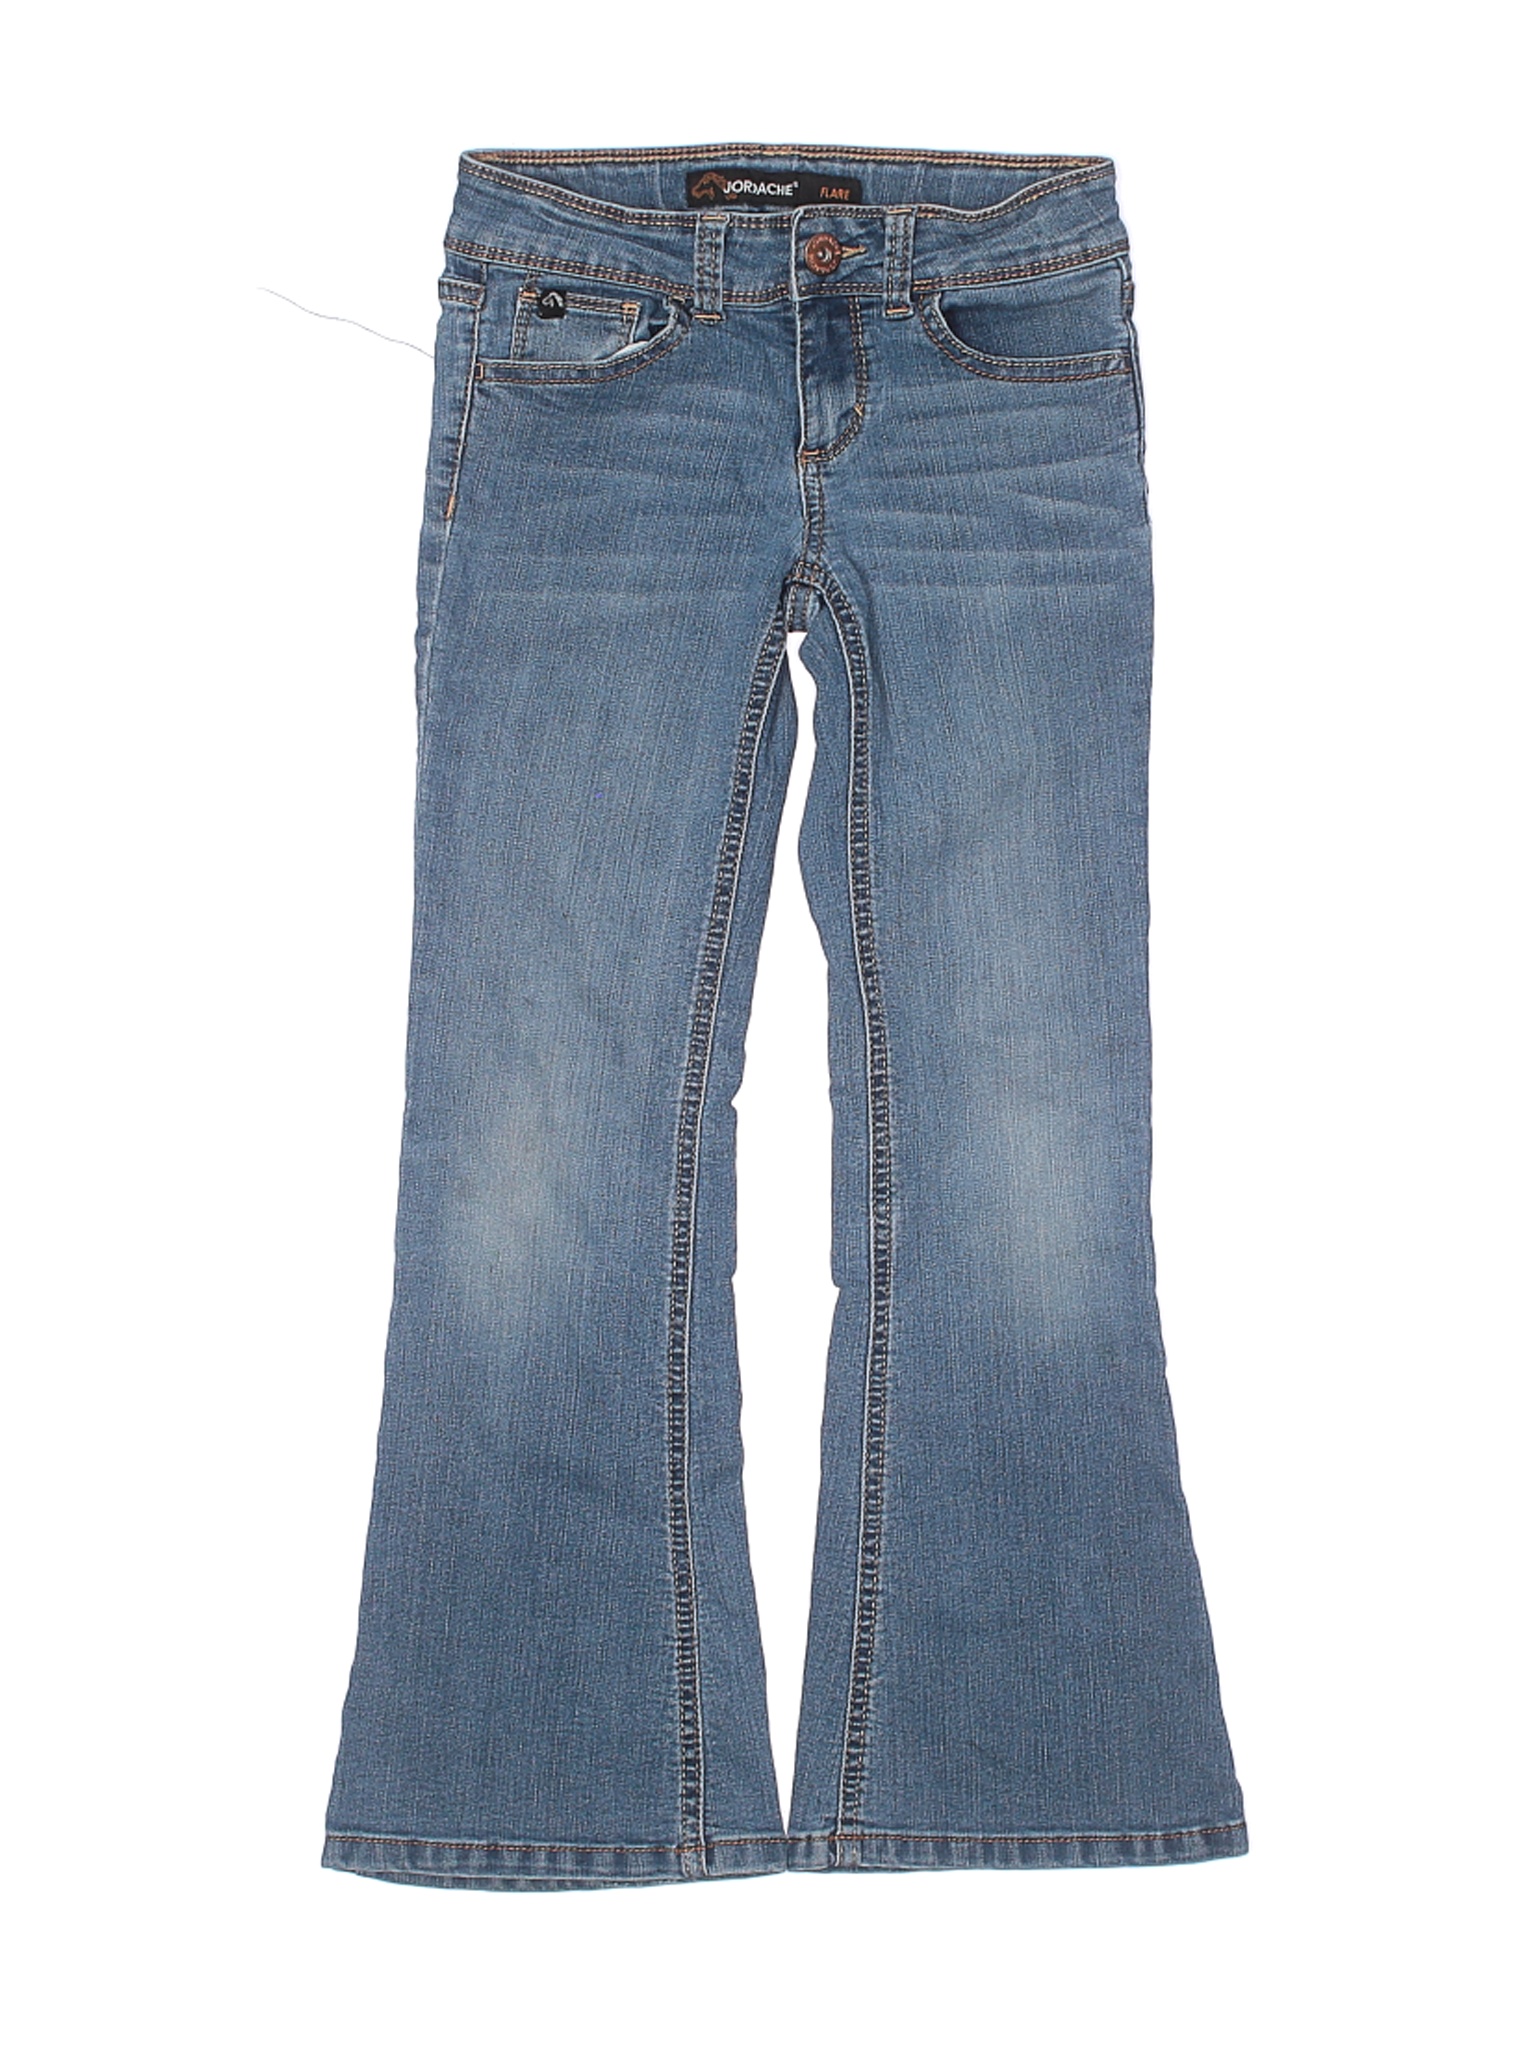 Jordache Girls Blue Jeans 8 Slim | eBay